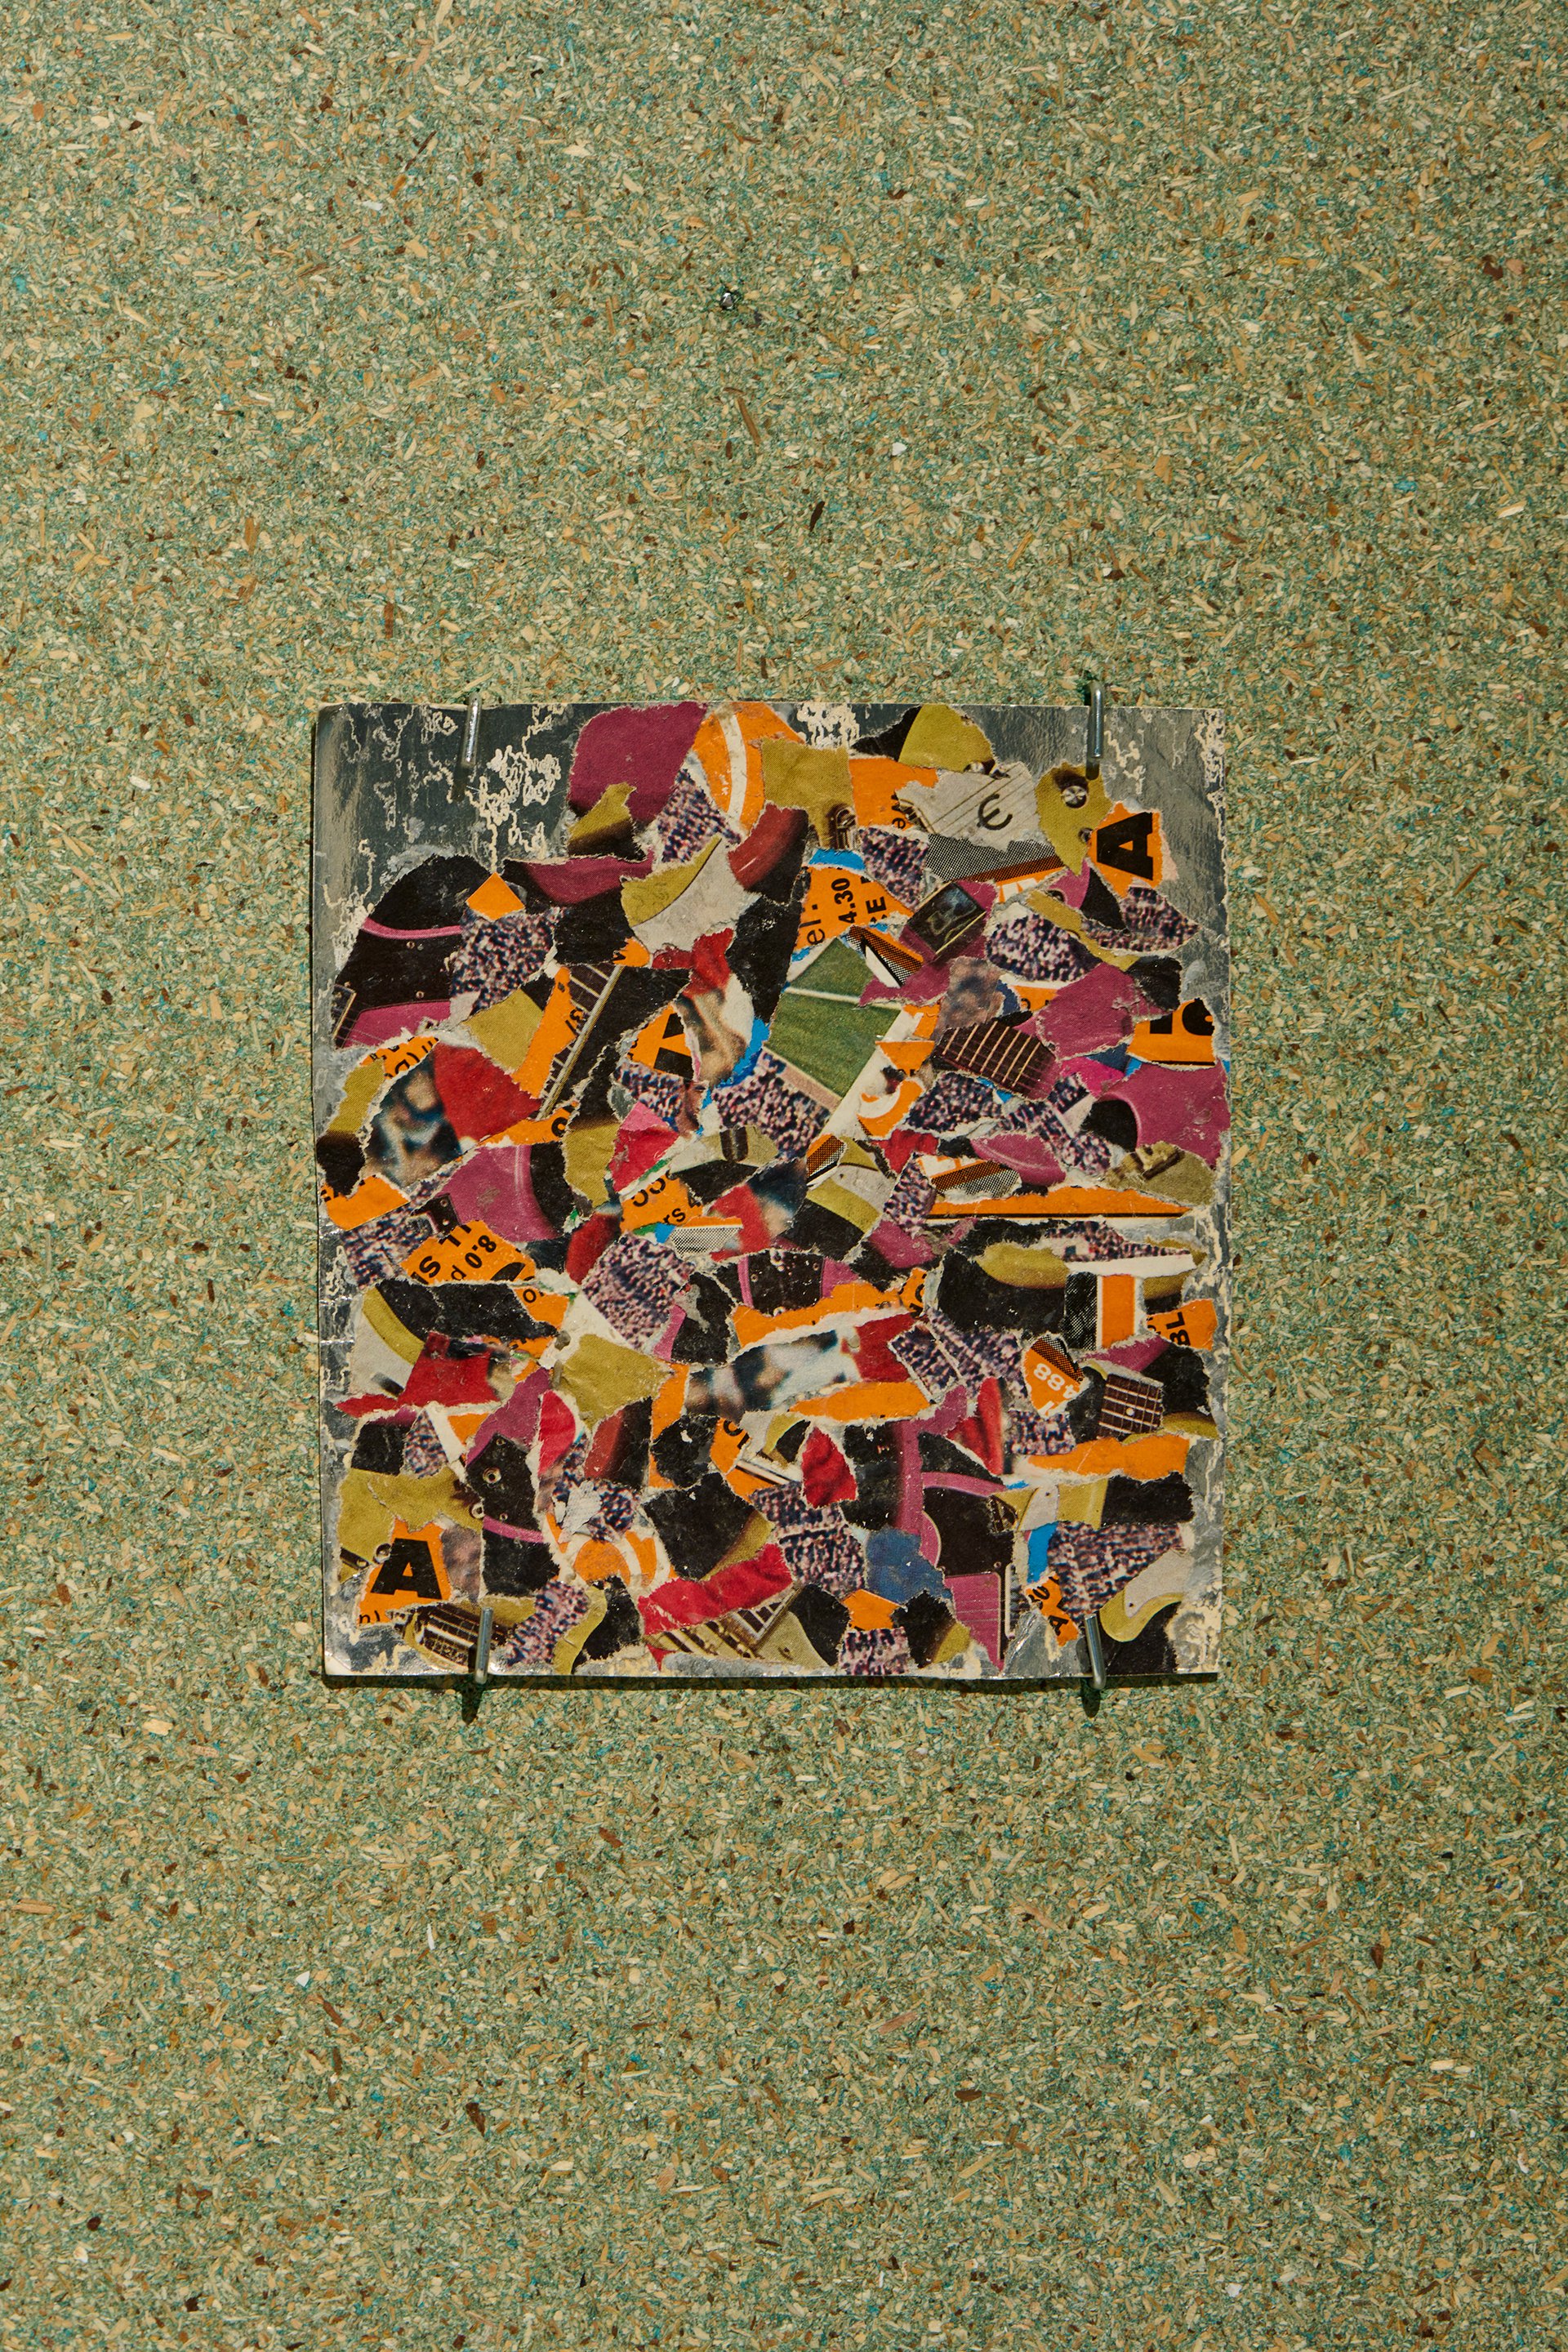 David Medalla, ‘The Exploding Galaxy’, 1967, paper, cardboard, 14,7 x 13,8 cm, Bonner Kunstverein, 2021. 